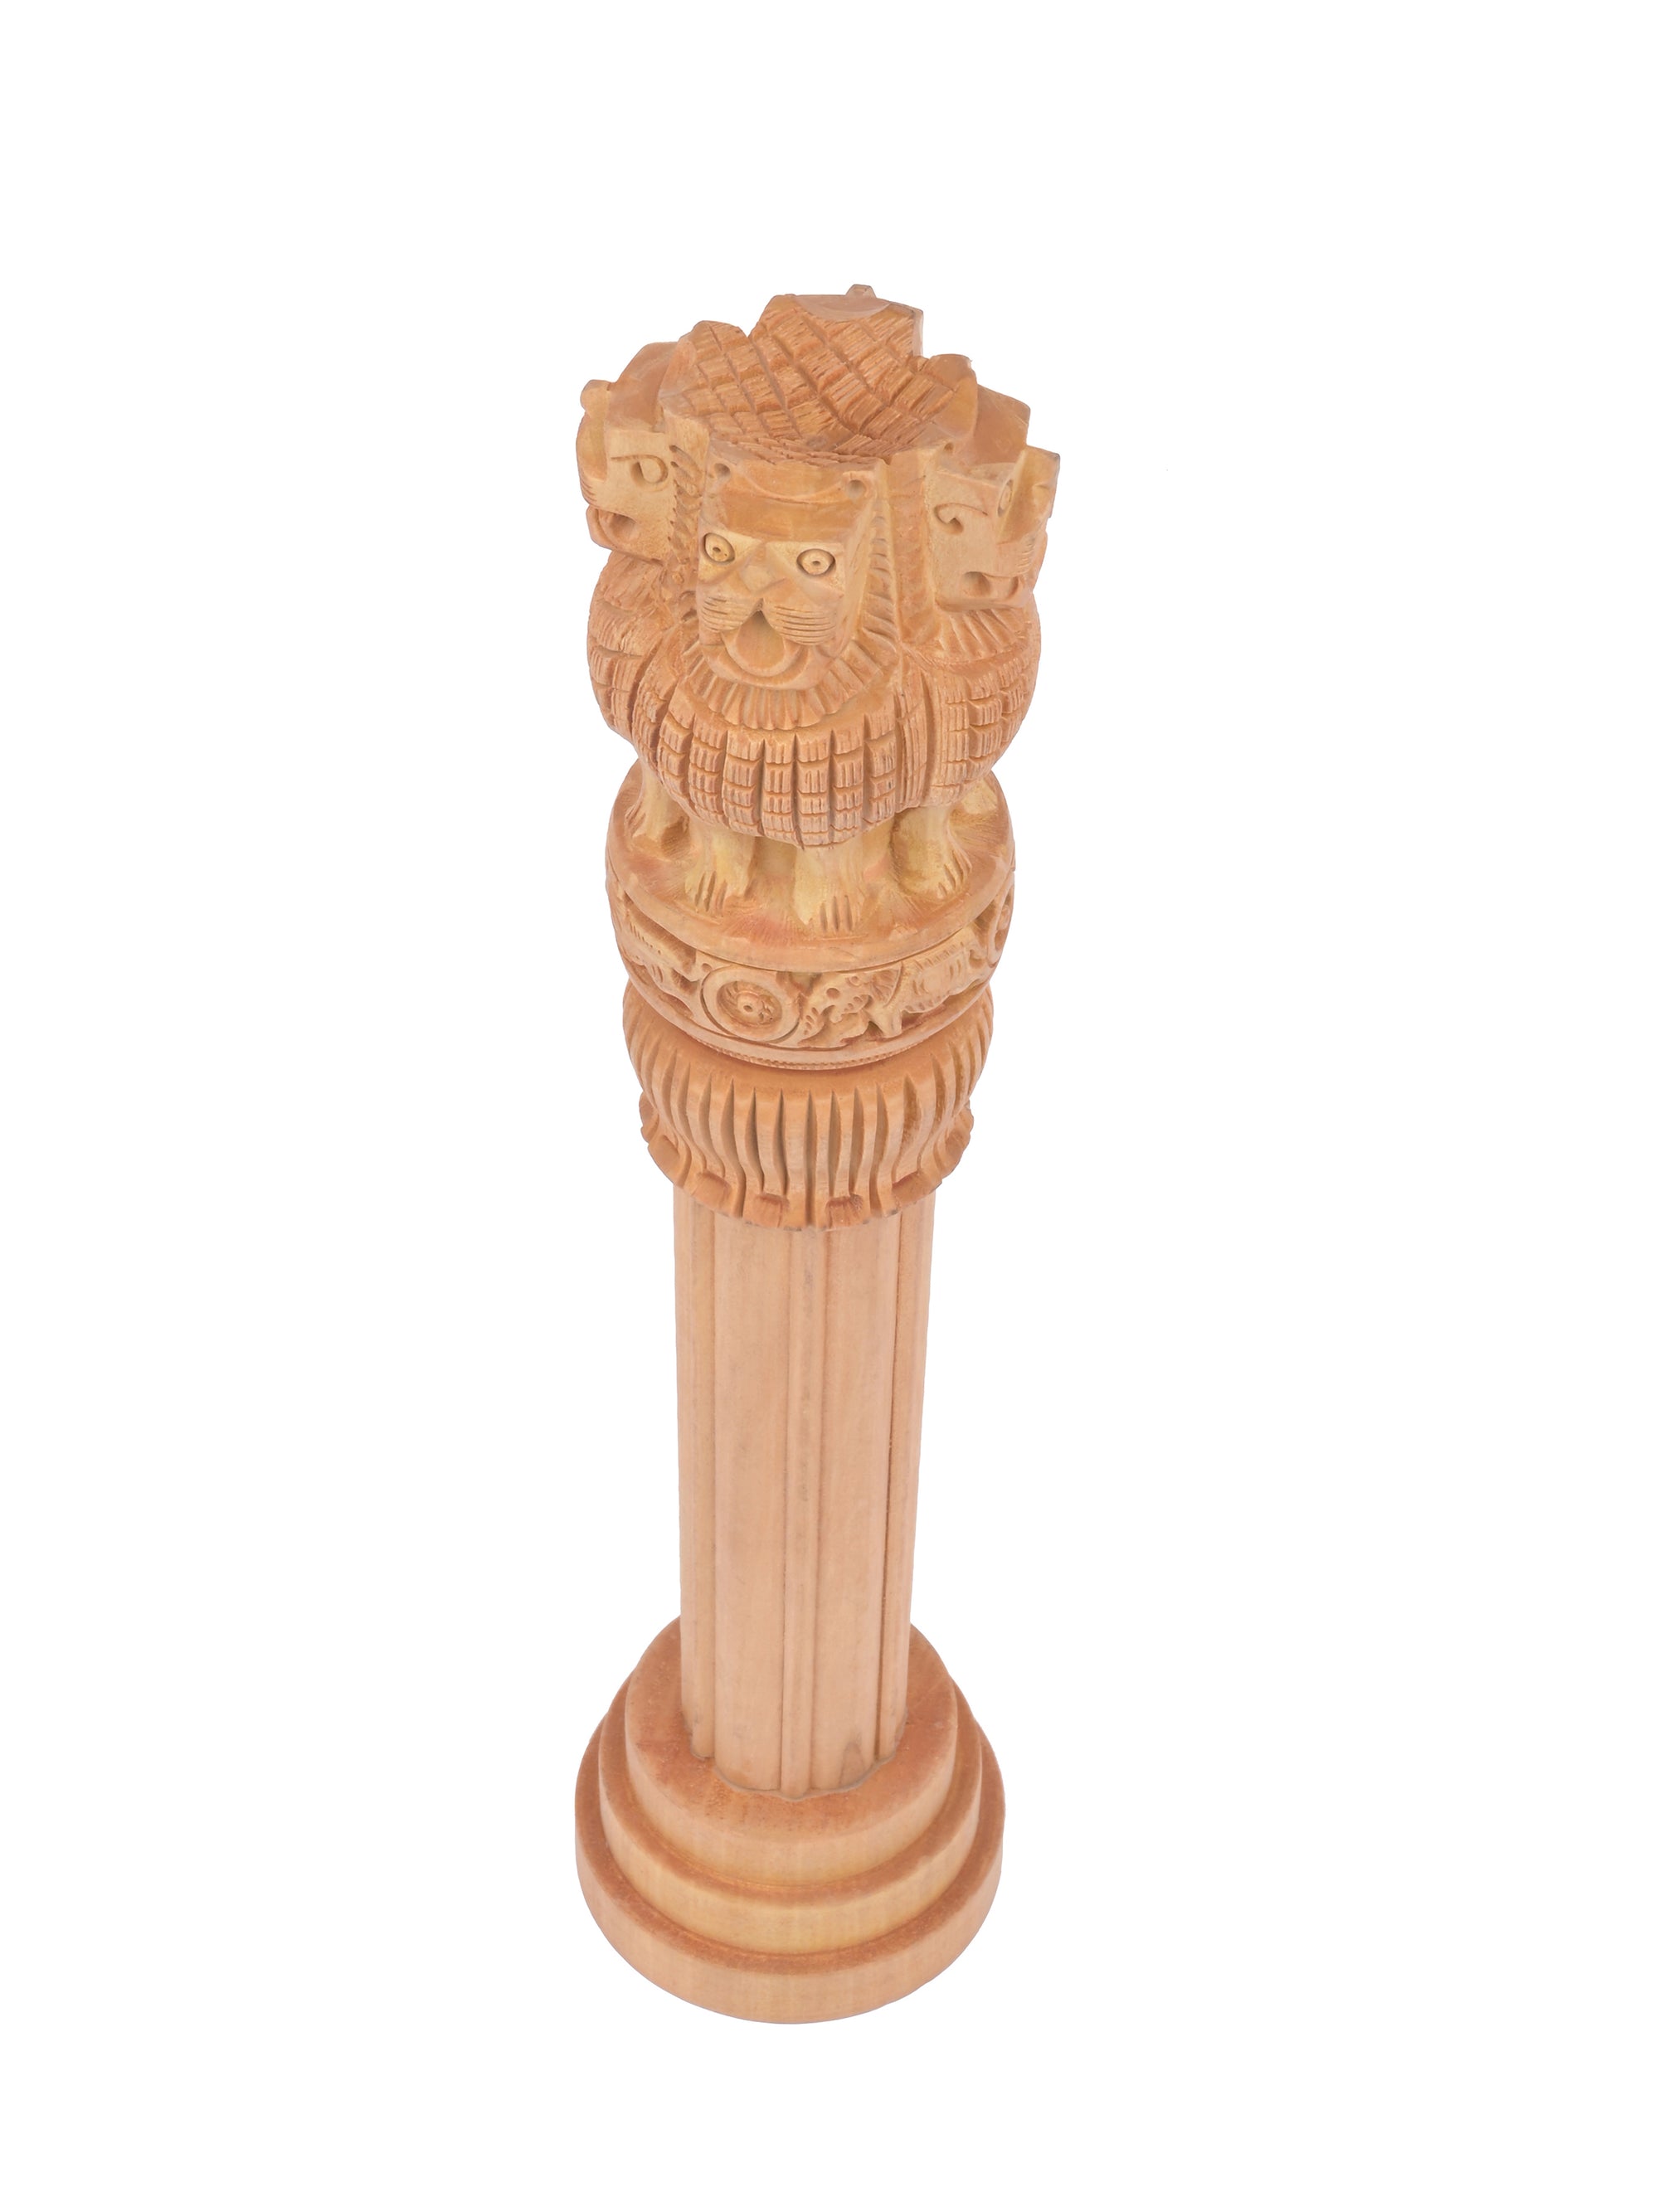 Kadam wood carved Ashok Stambh / Pillar - 12 inches in height - The Heritage Artifacts